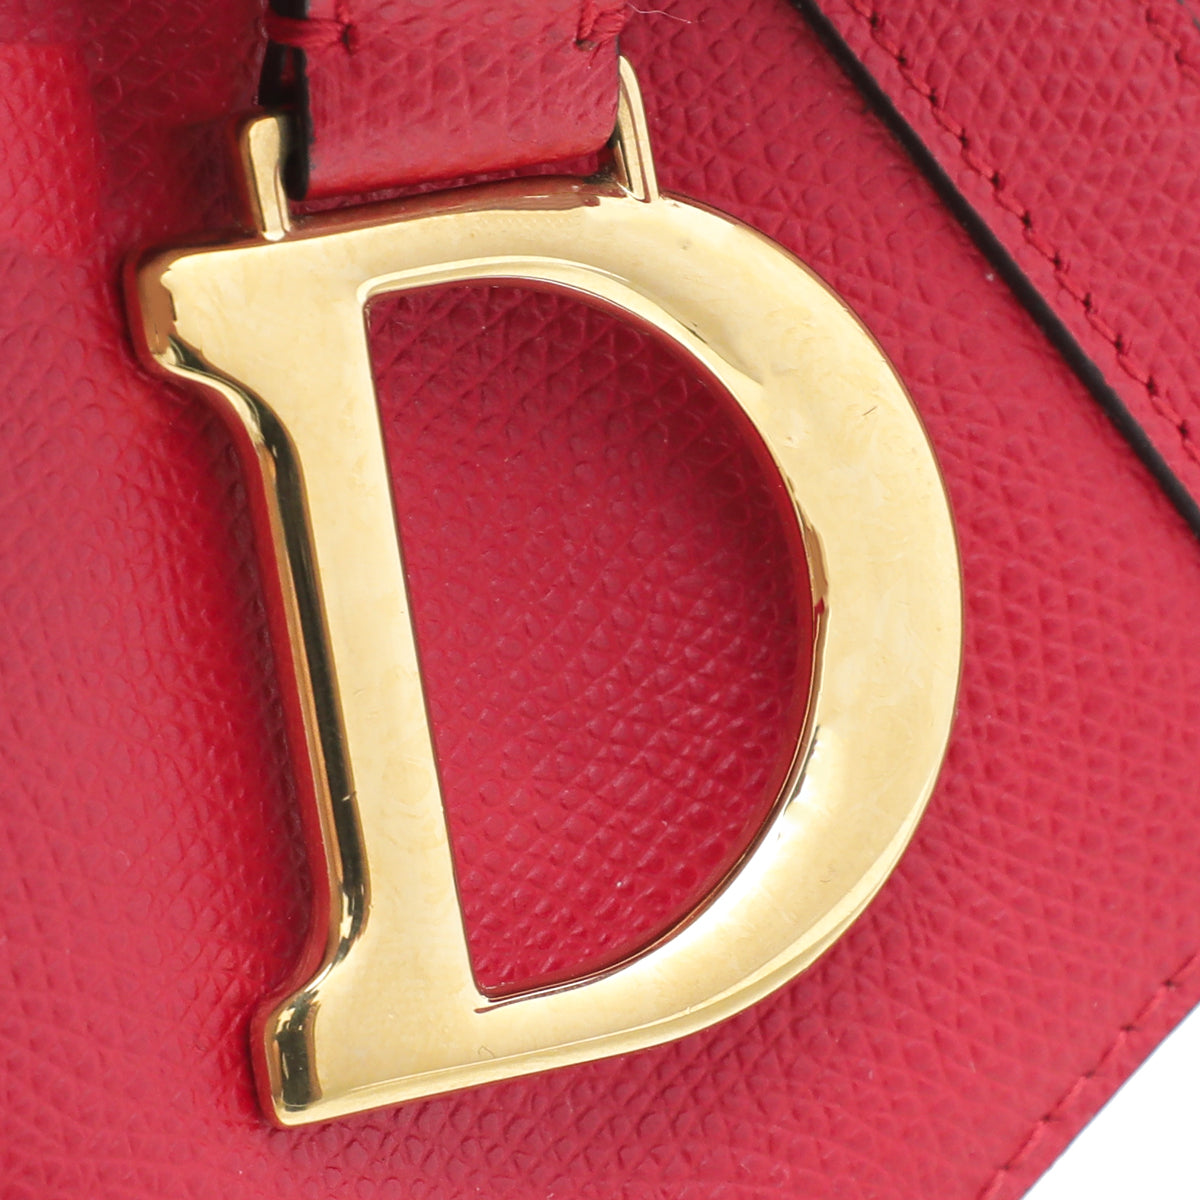 Christian Dior Red Saddle Mini Bag W/ Bag Strap